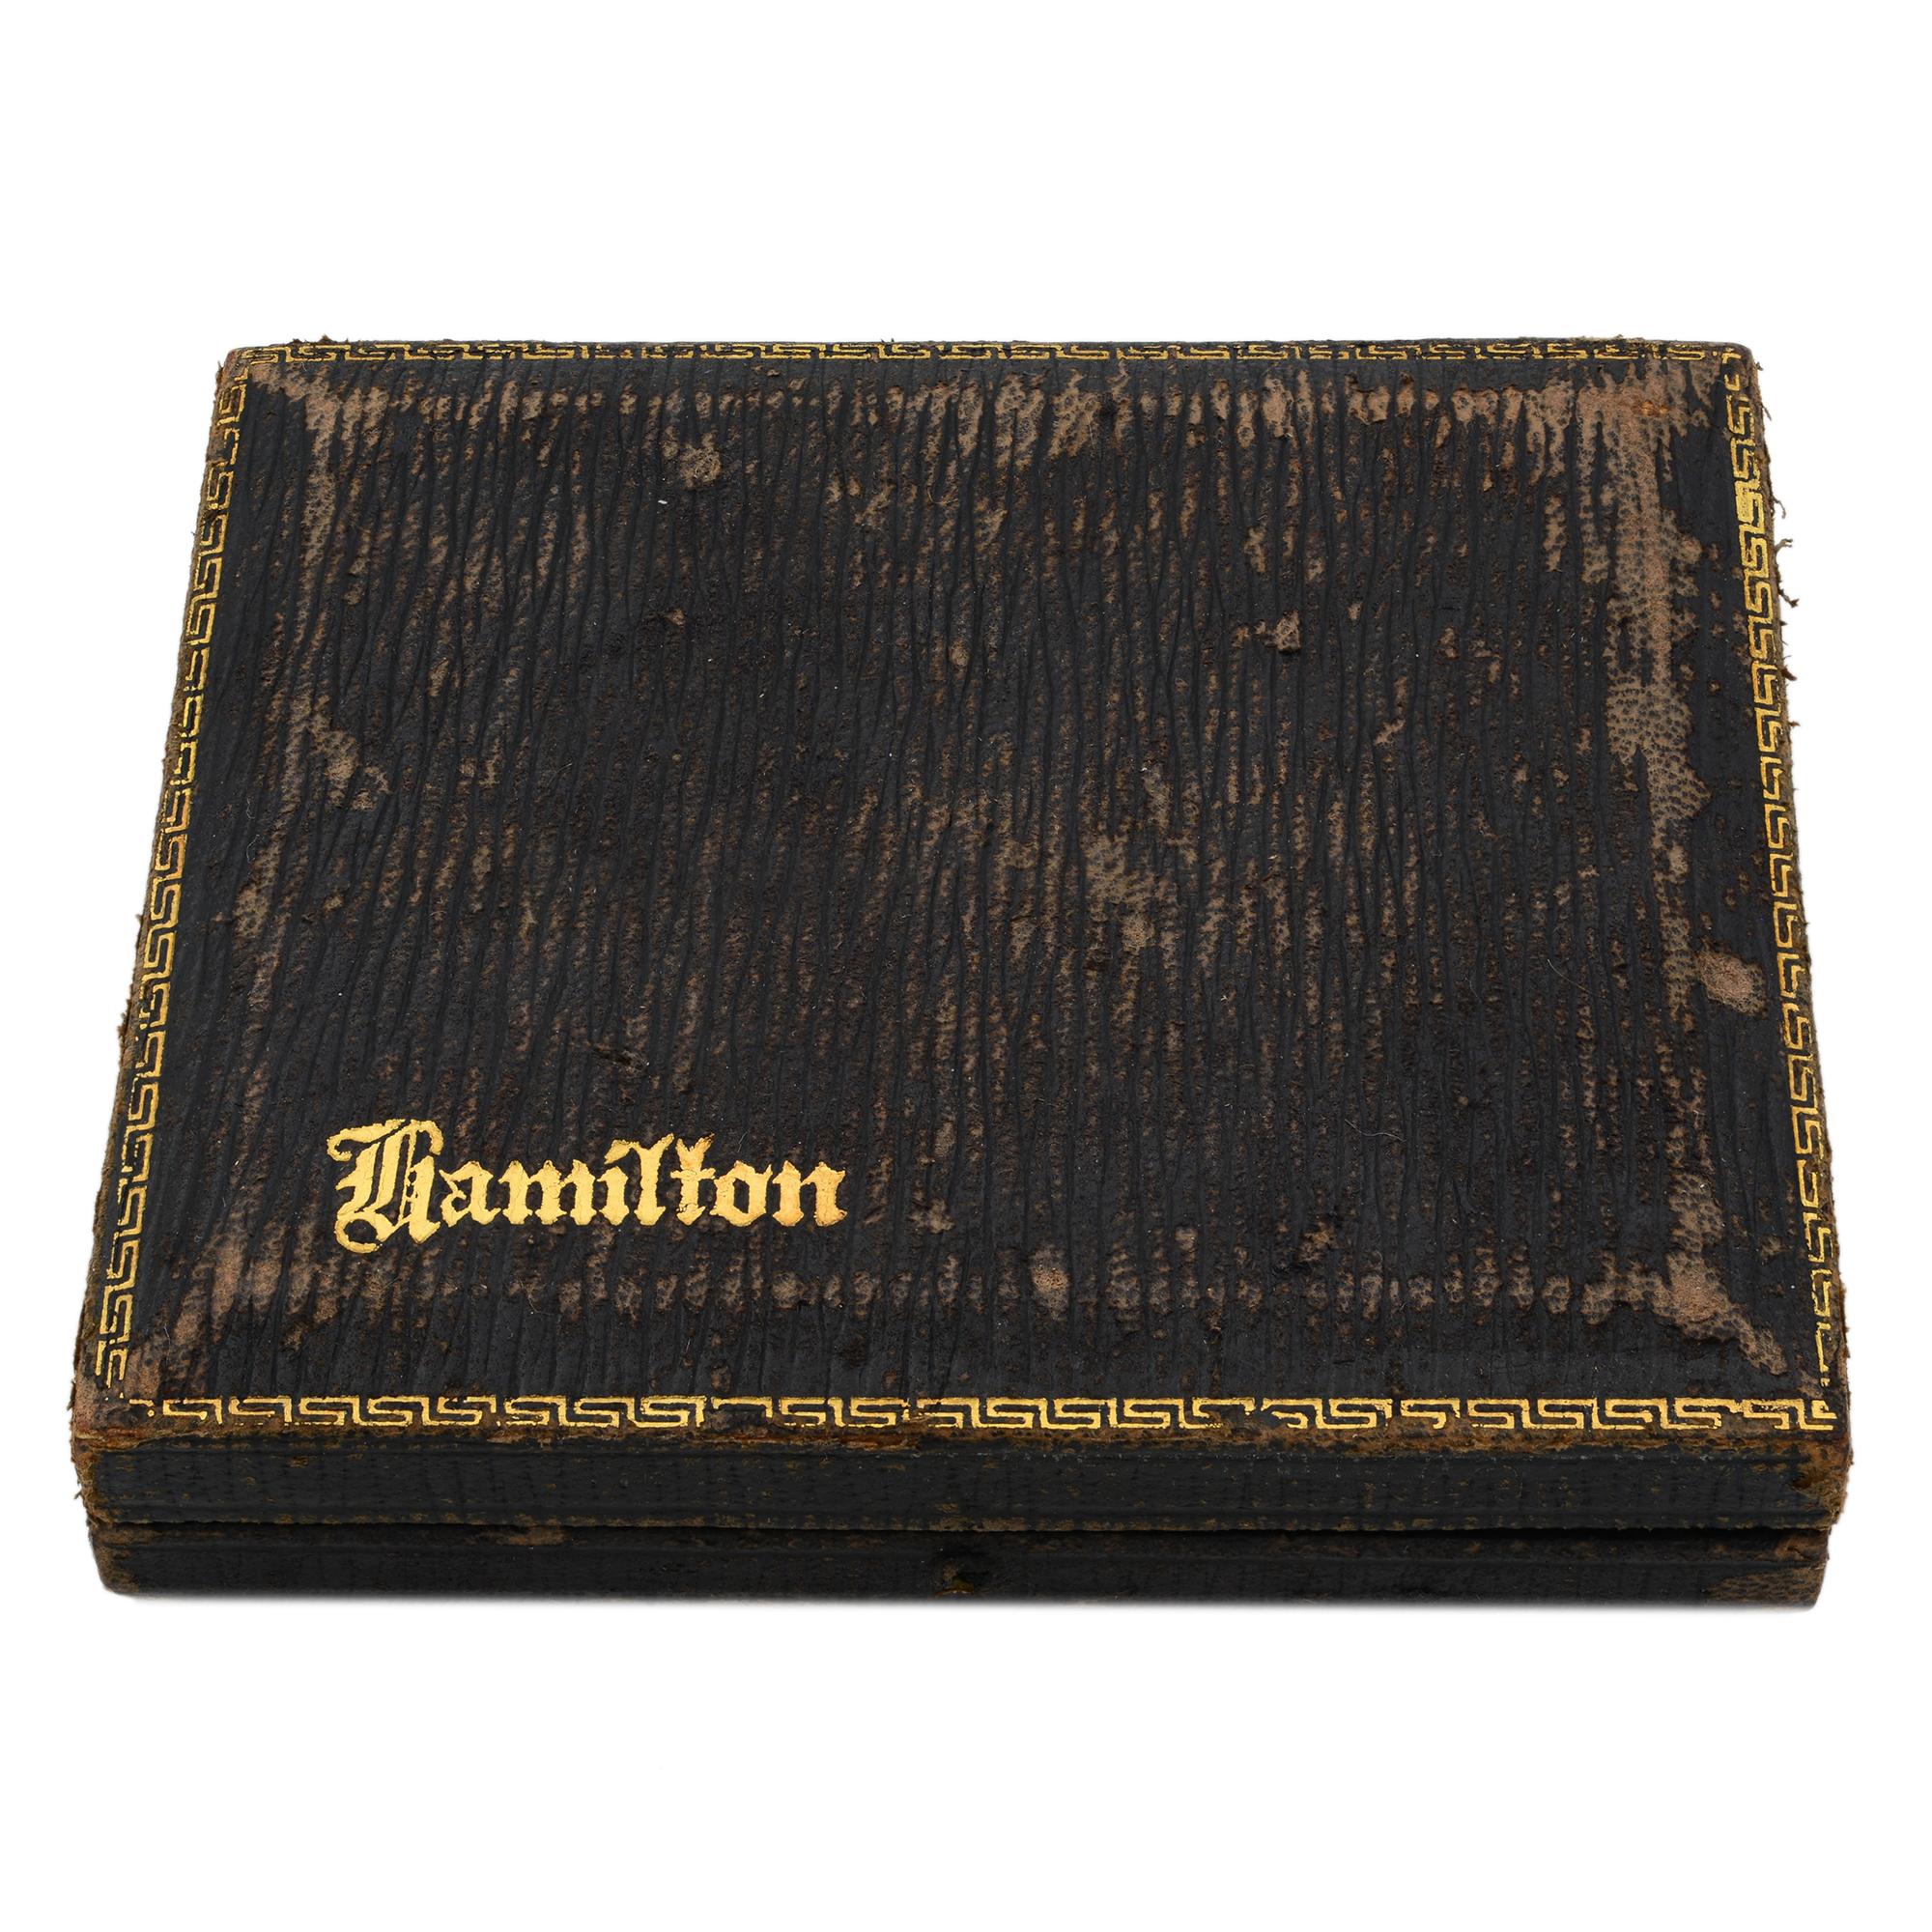 Hamilton Vintage Open Face 14 Karat White Gold Manual Wind Men’s Pocket Watch 1